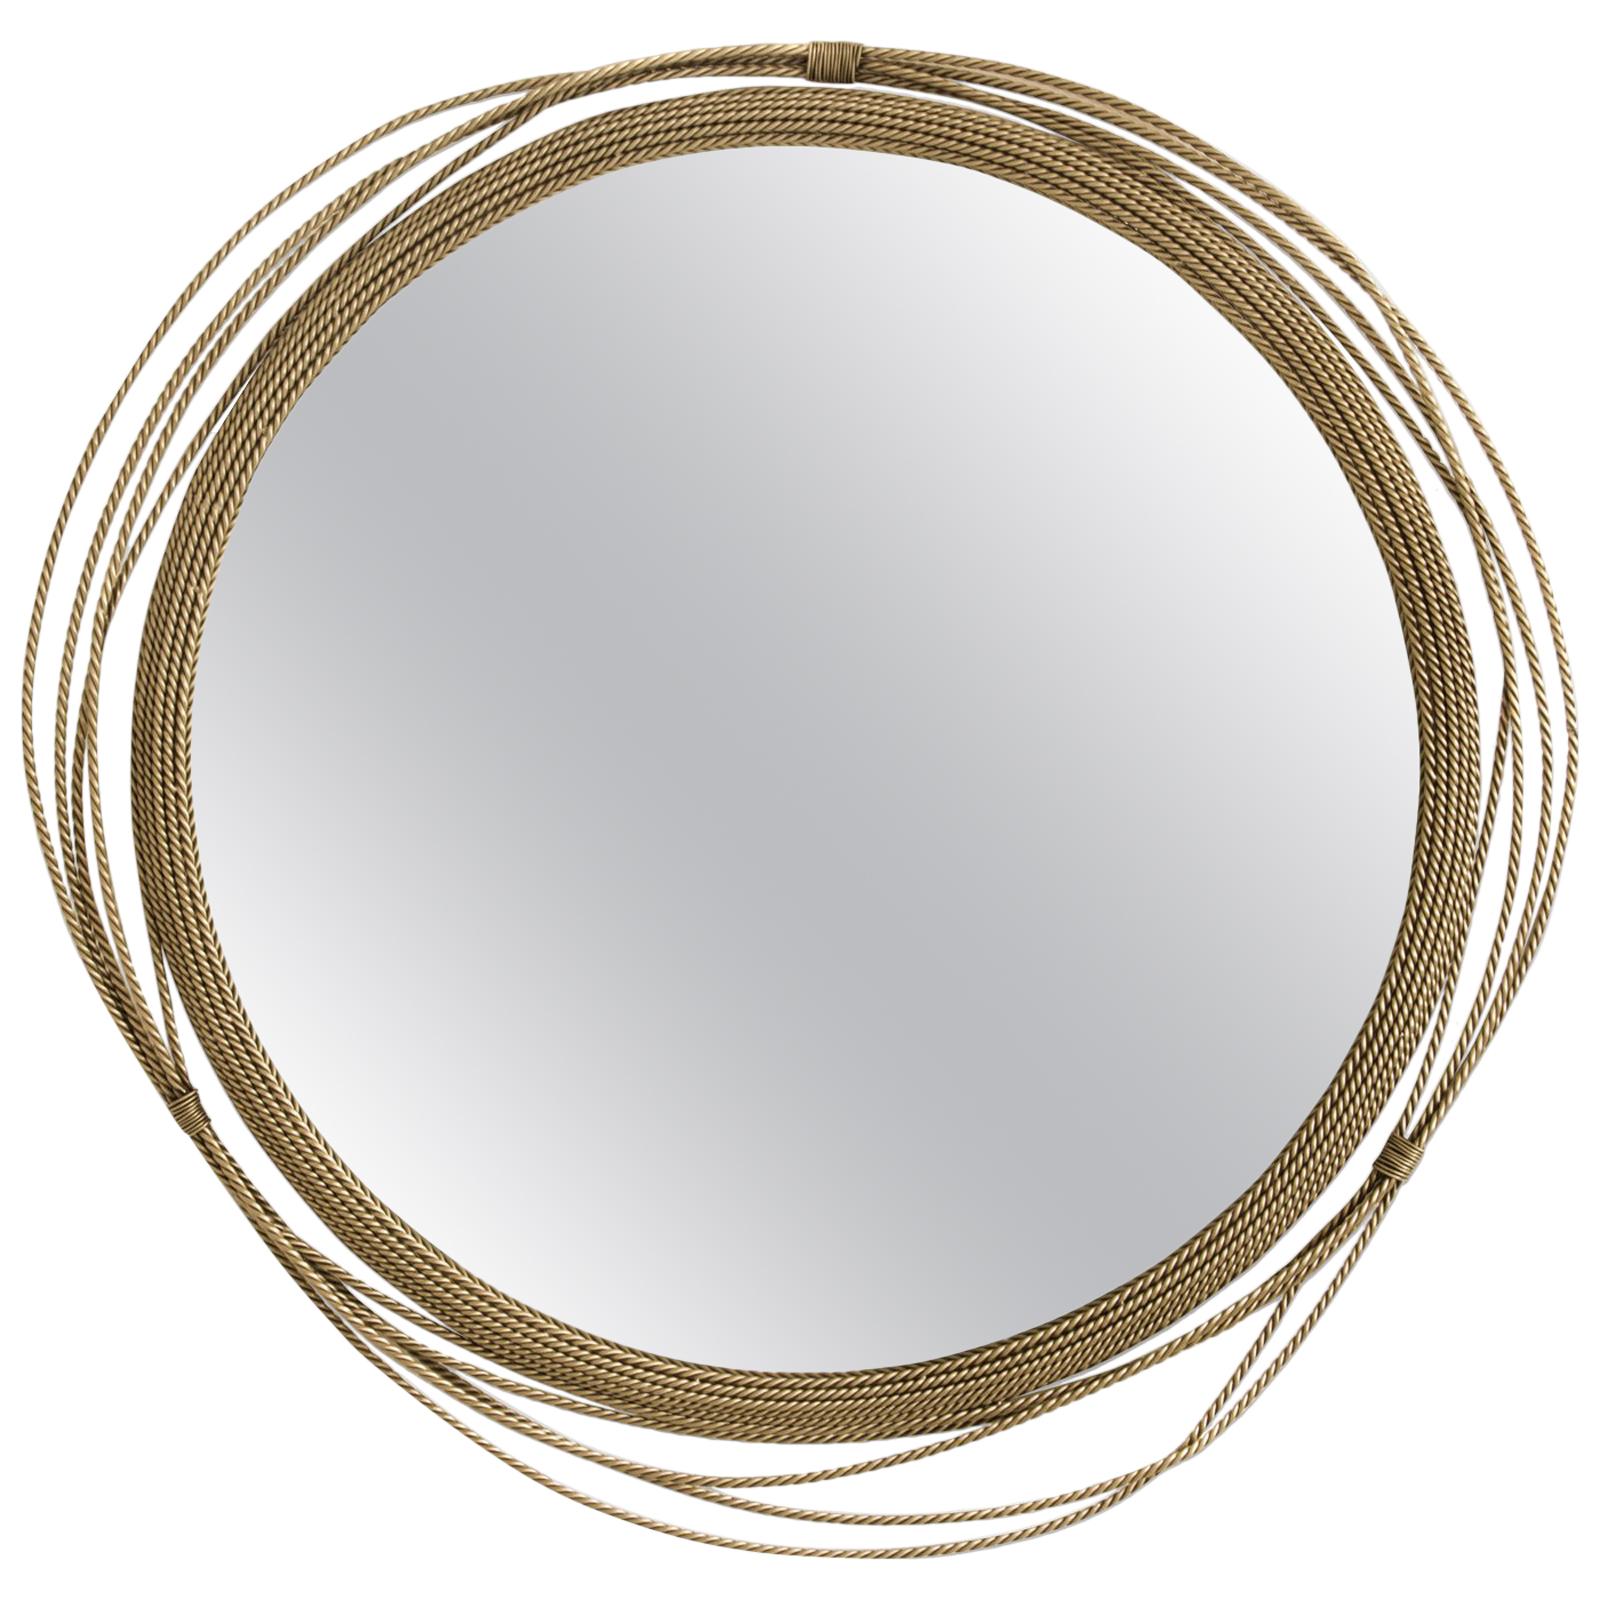 Brass Knot Round Mirror For Sale